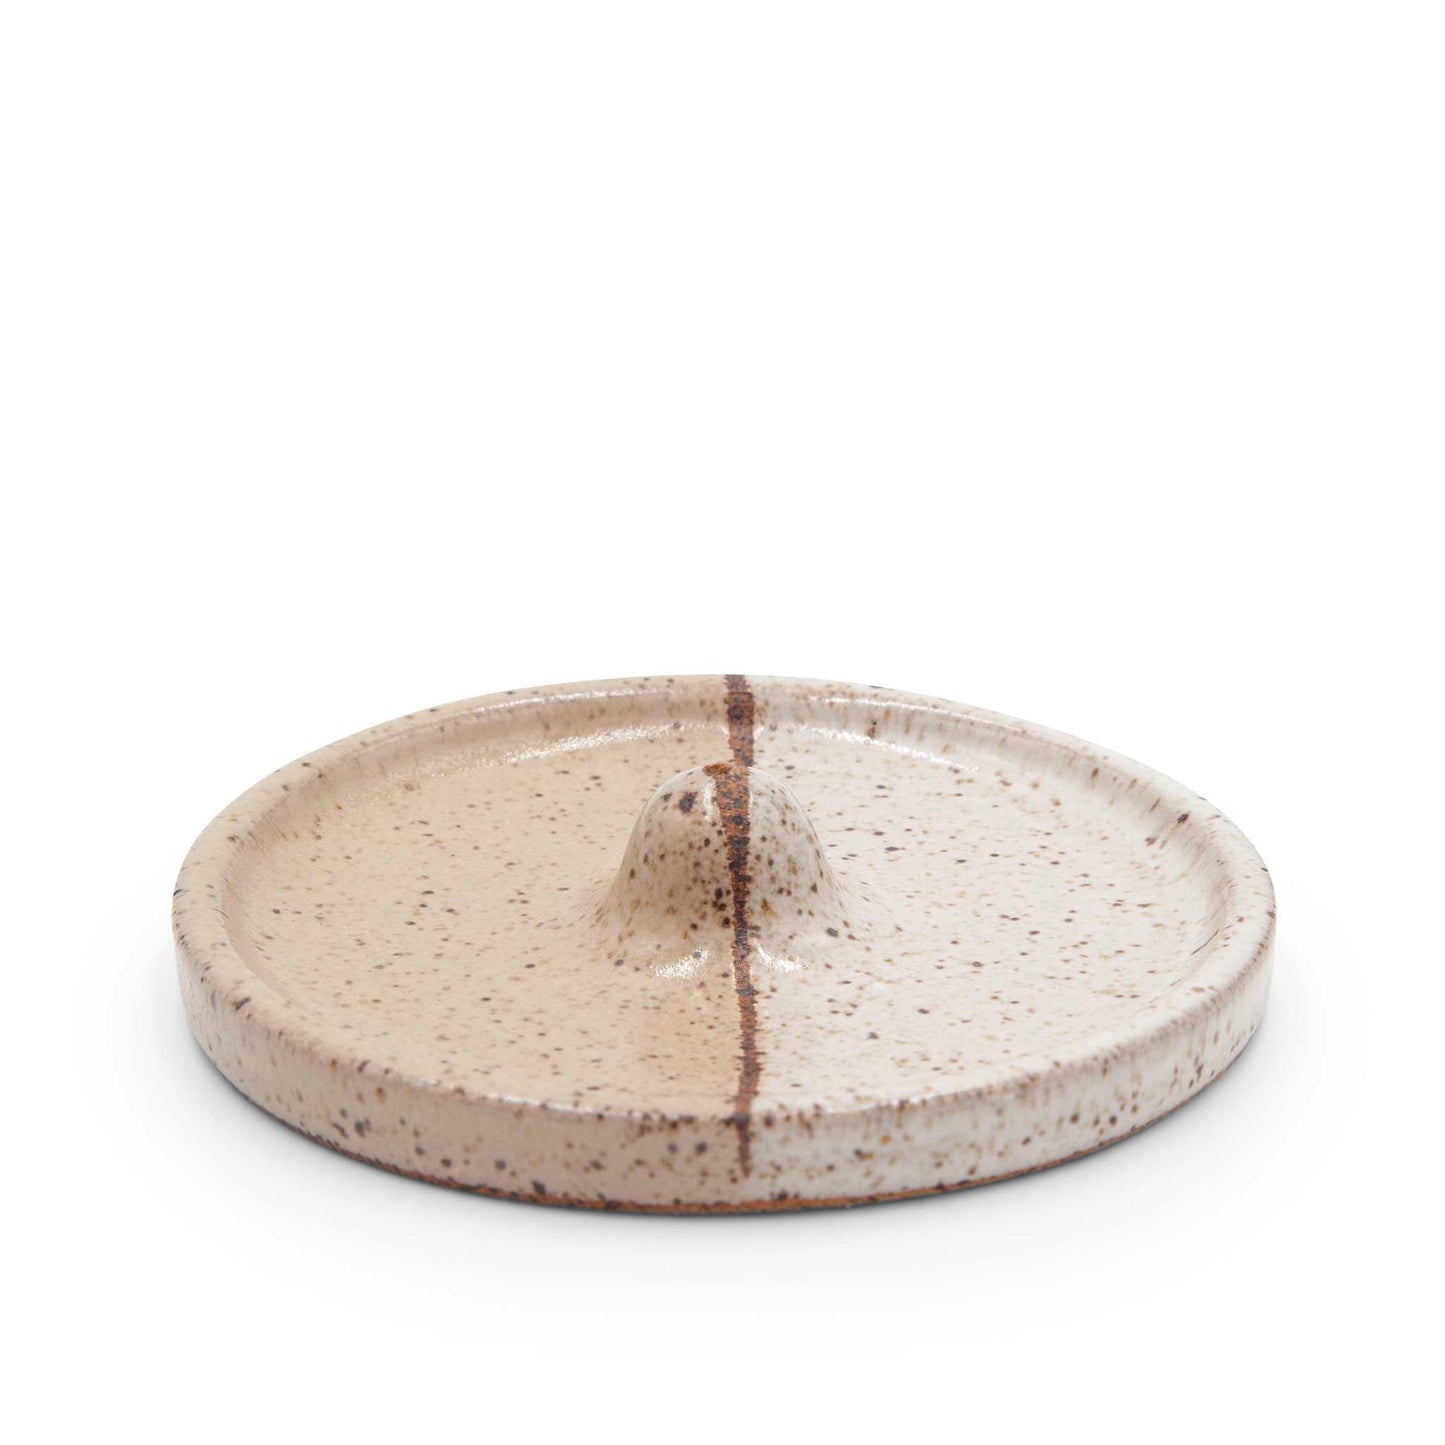 Load image into Gallery viewer, Castoe Pots Incense Ceramic Incense Holder - Two Colour Block Speckled Glaze - Handmade by Castoe Pots
